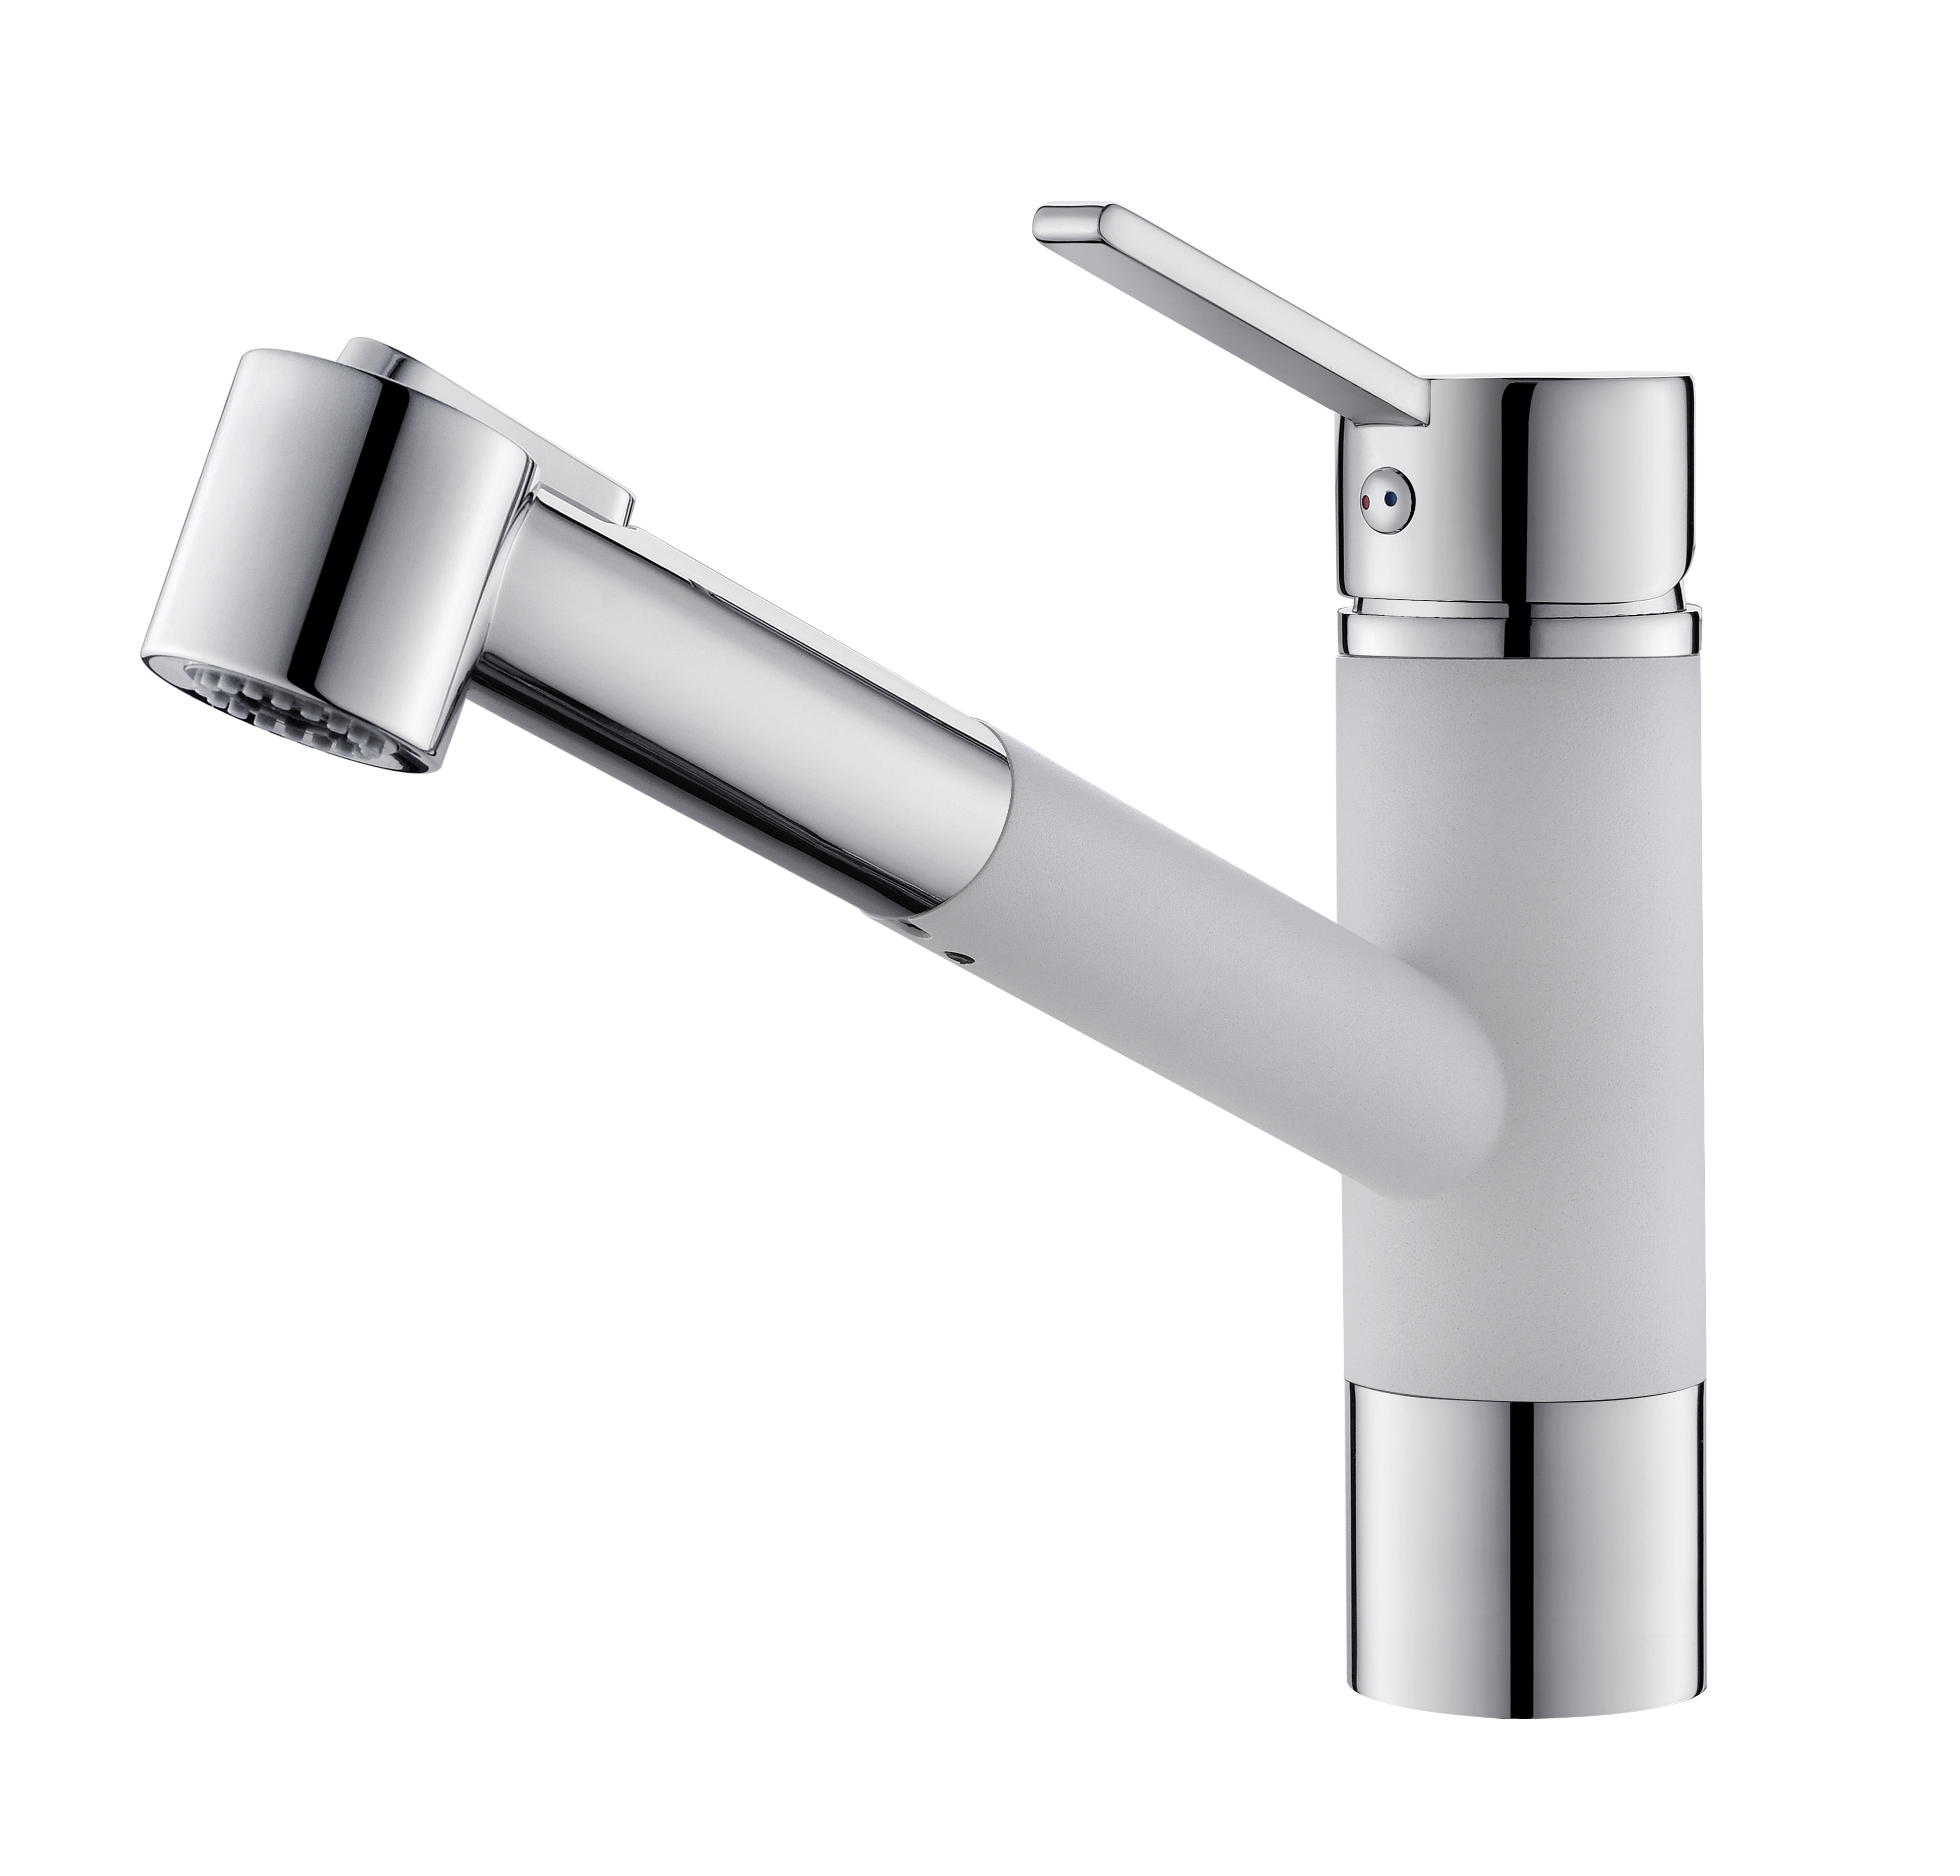 APS153-CB Kitchen Sink Faucet Tap Kitchen Faucet Wide Spray Kitchen Faucet With Pull-Out Spout